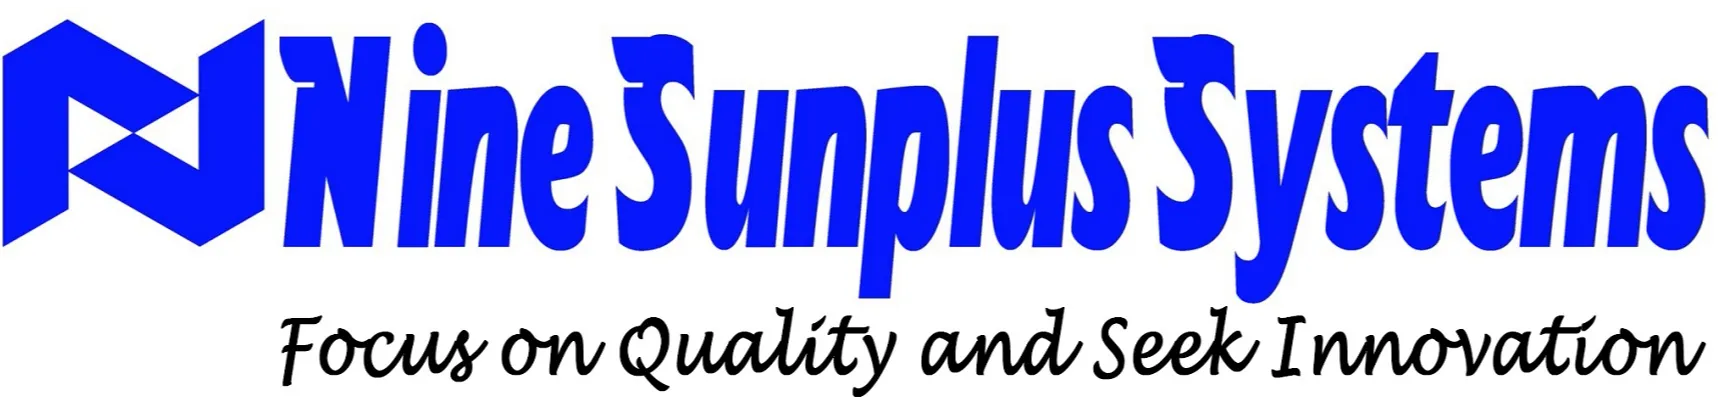 Nine Sunsplus Systems Co., Ltd.